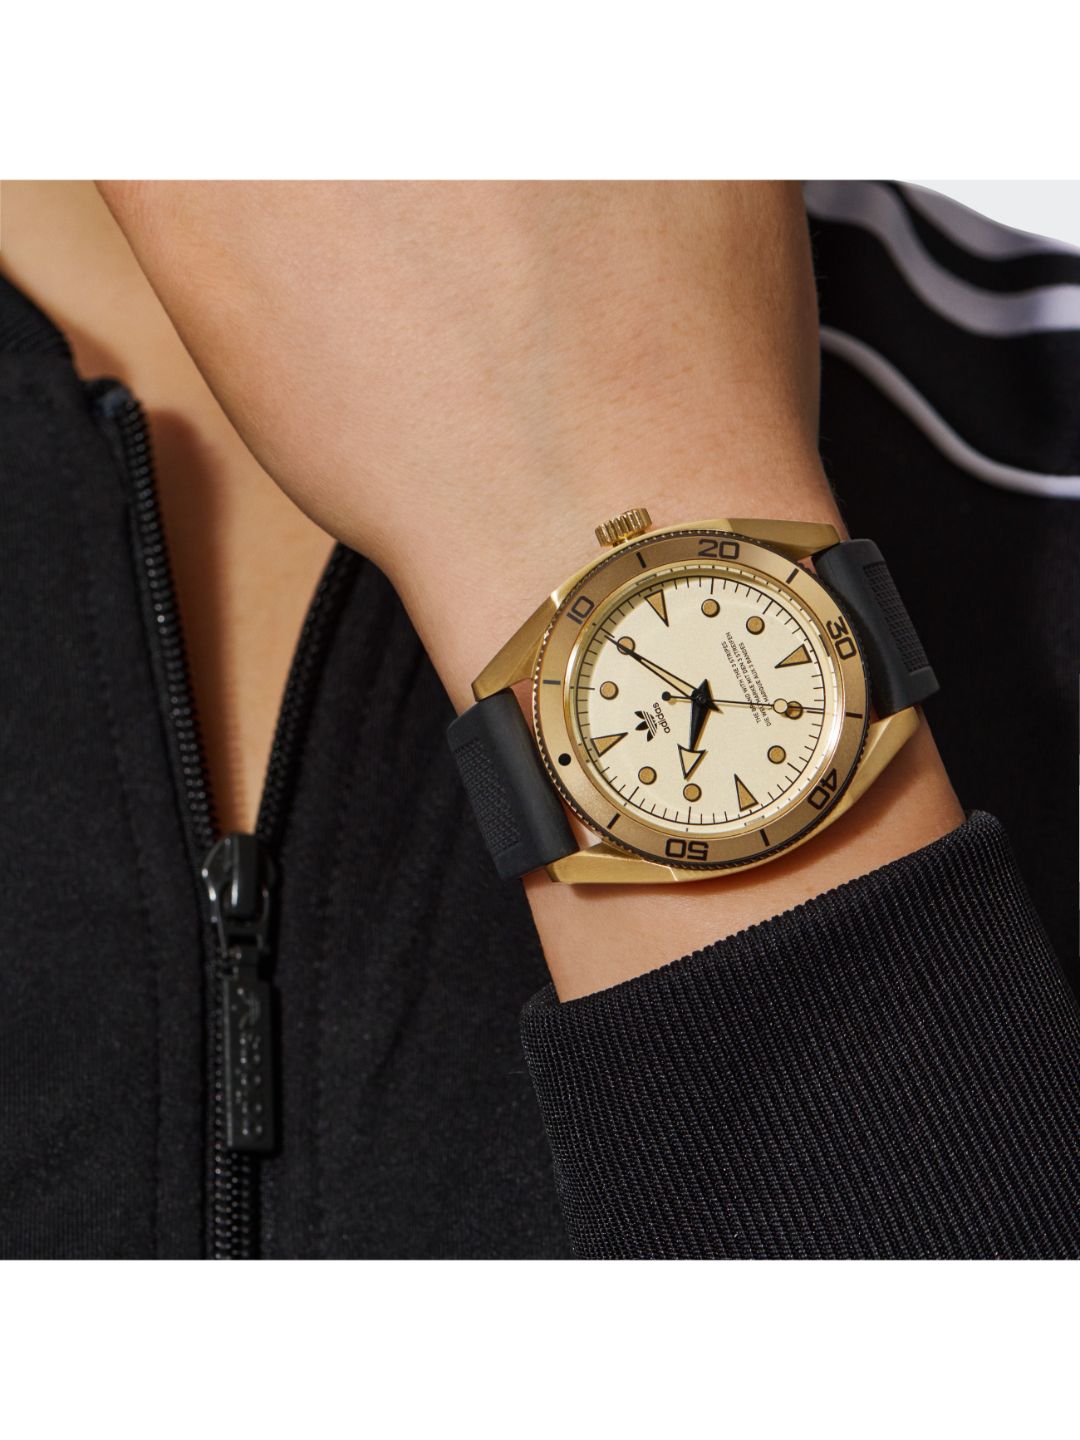 Adidas Originals Gold Dial Unisex Watch - AOFH22002